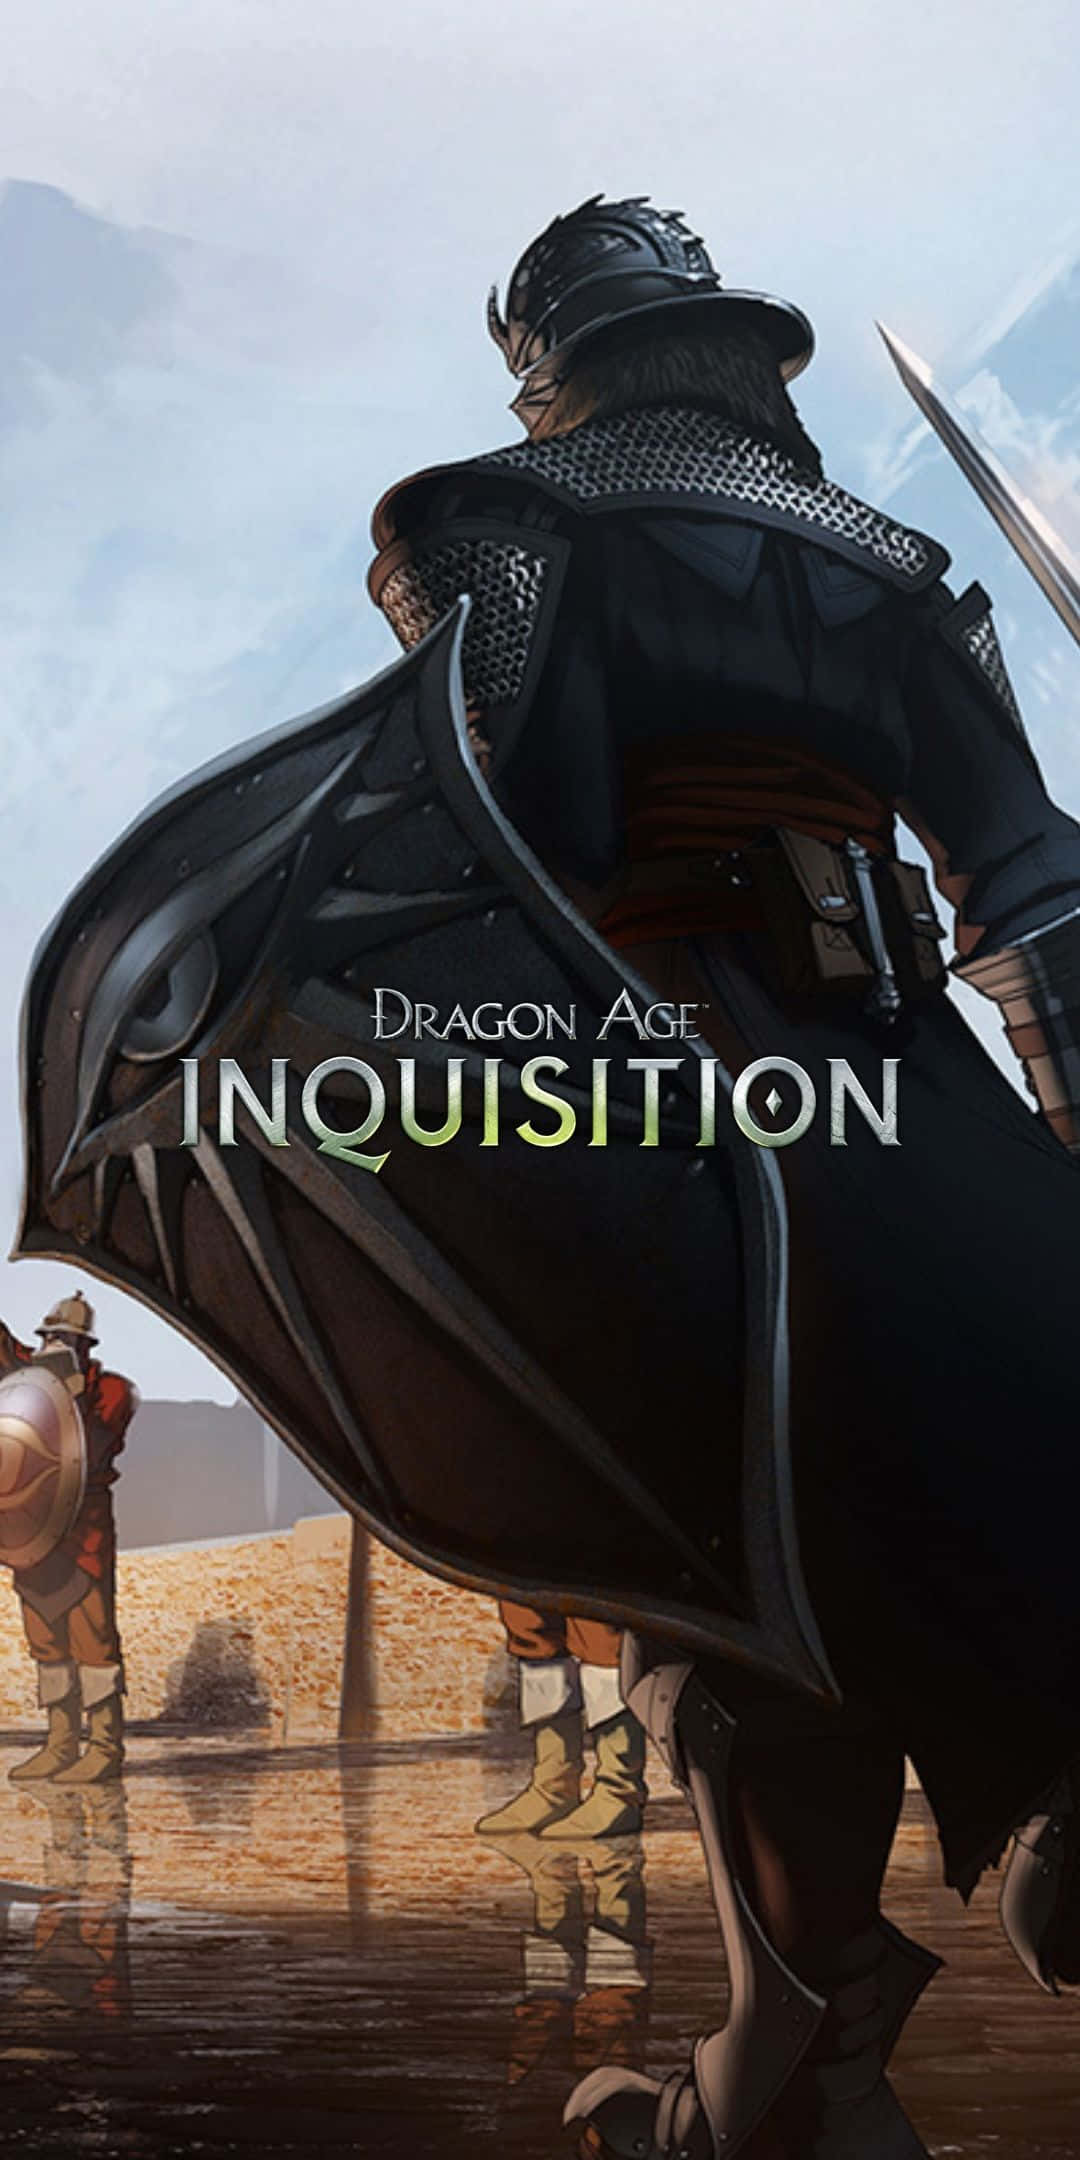 Majestic Fantasy World of “Dragon Age: Inquisition” on Google Pixel 3